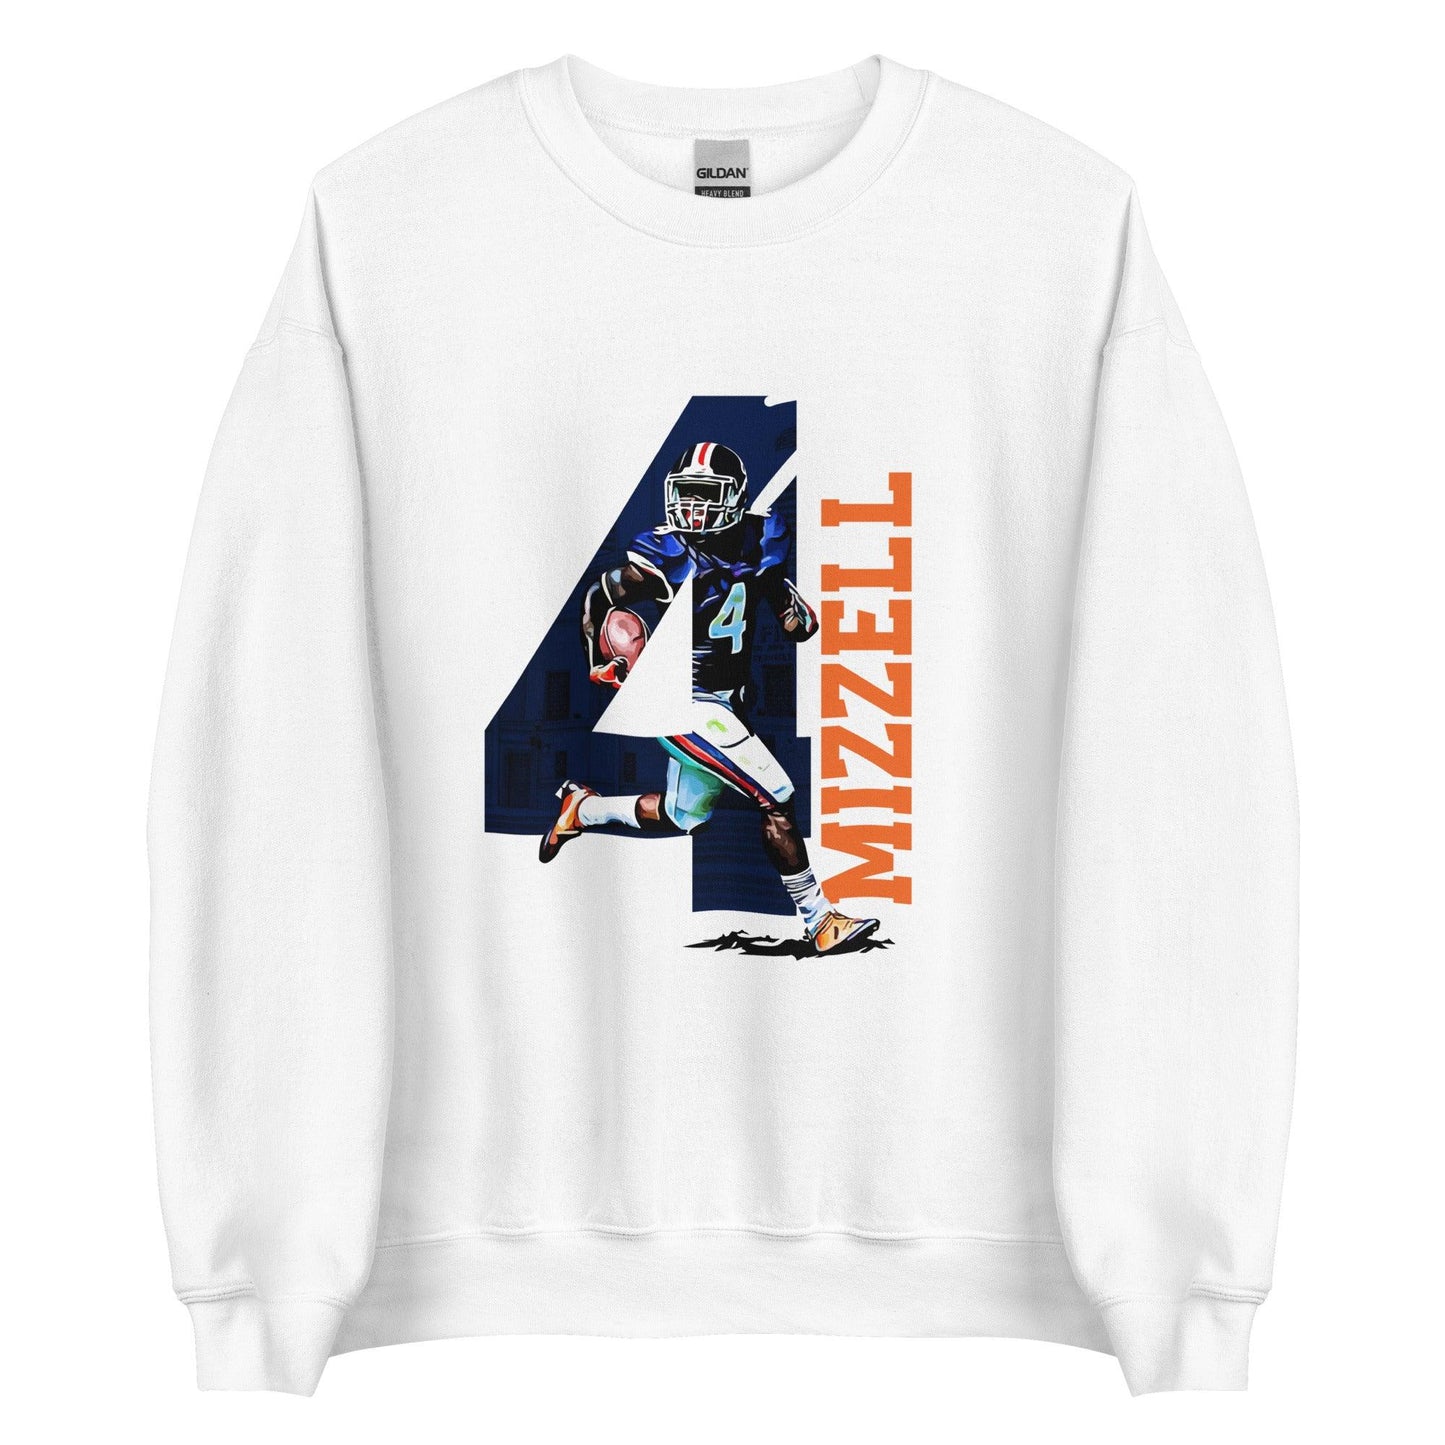 Taquan Mizzell Sr. "4" Sweatshirt - Fan Arch